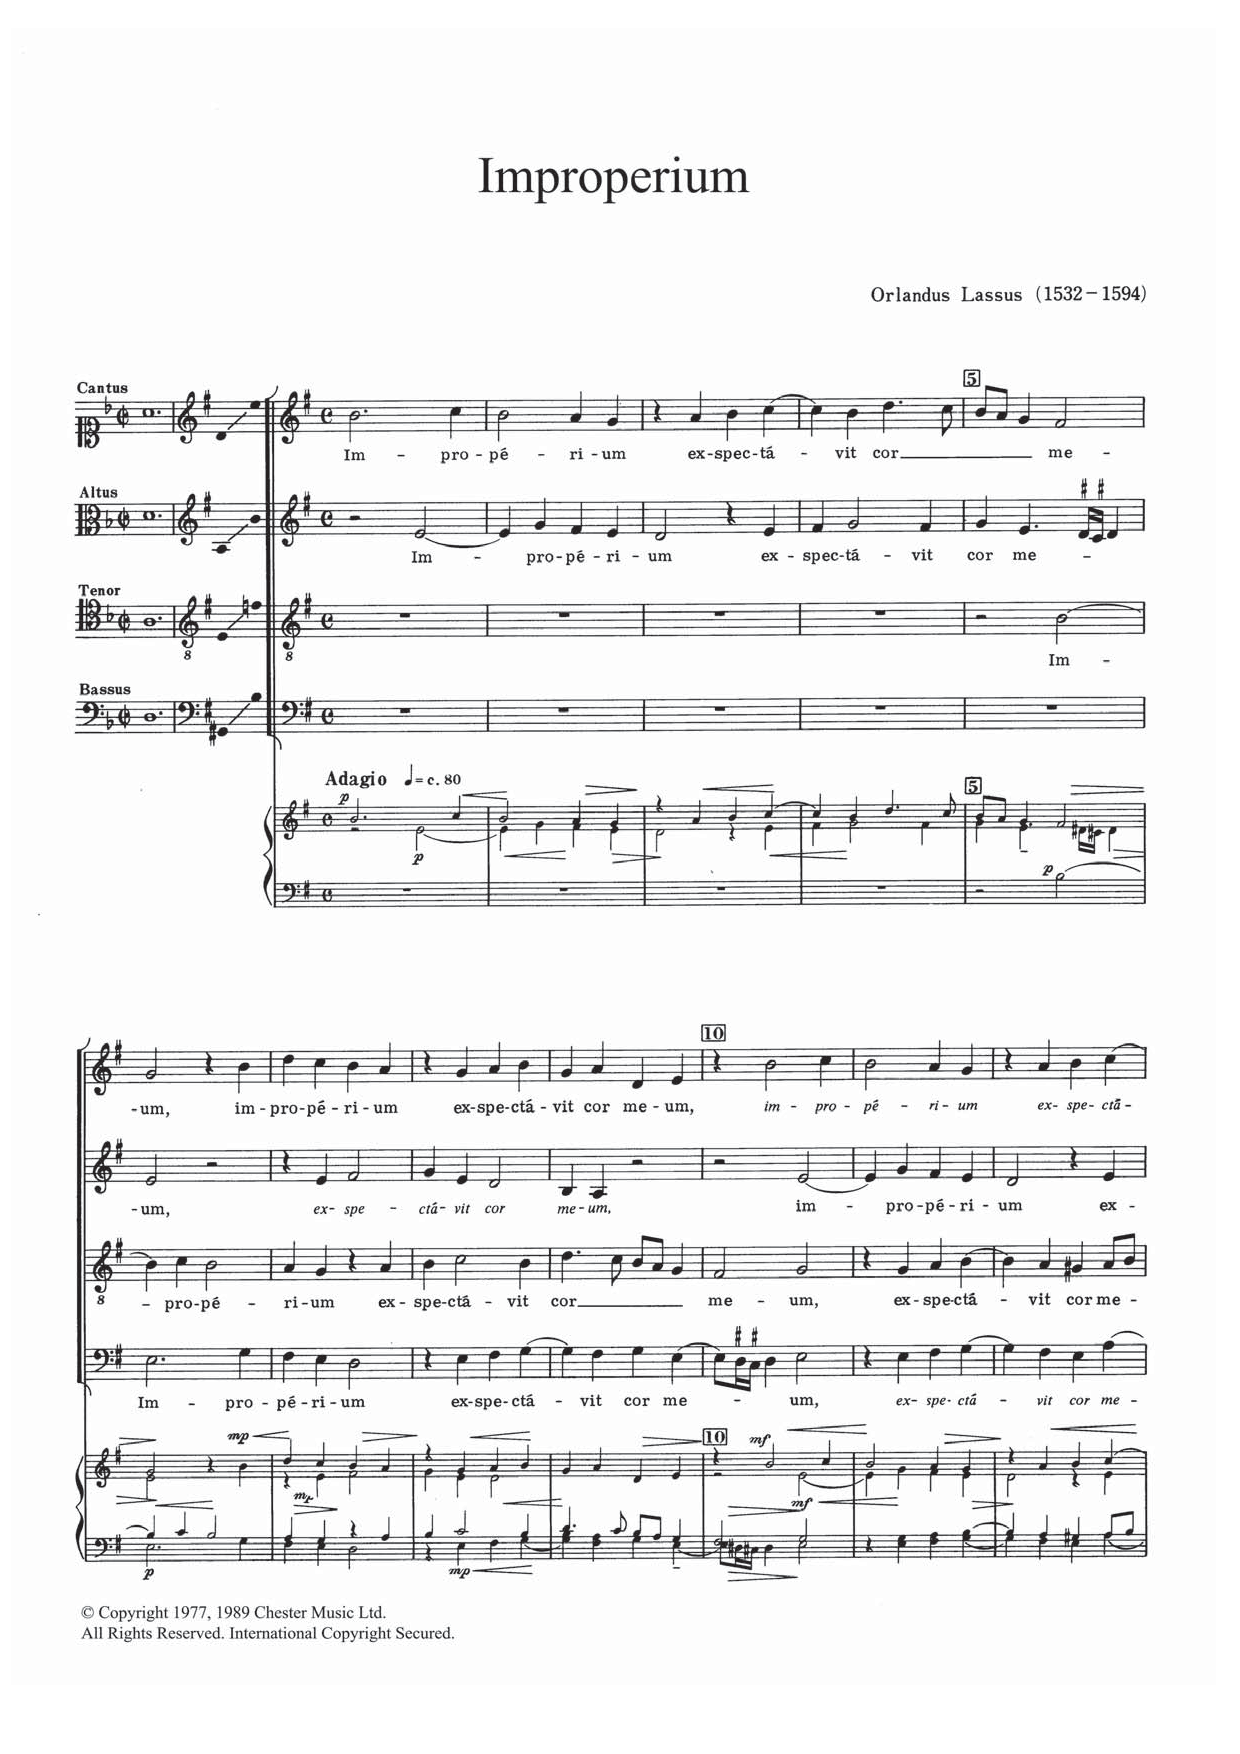 Orlandus Lassus Improperium Sheet Music Notes & Chords for SATB - Download or Print PDF